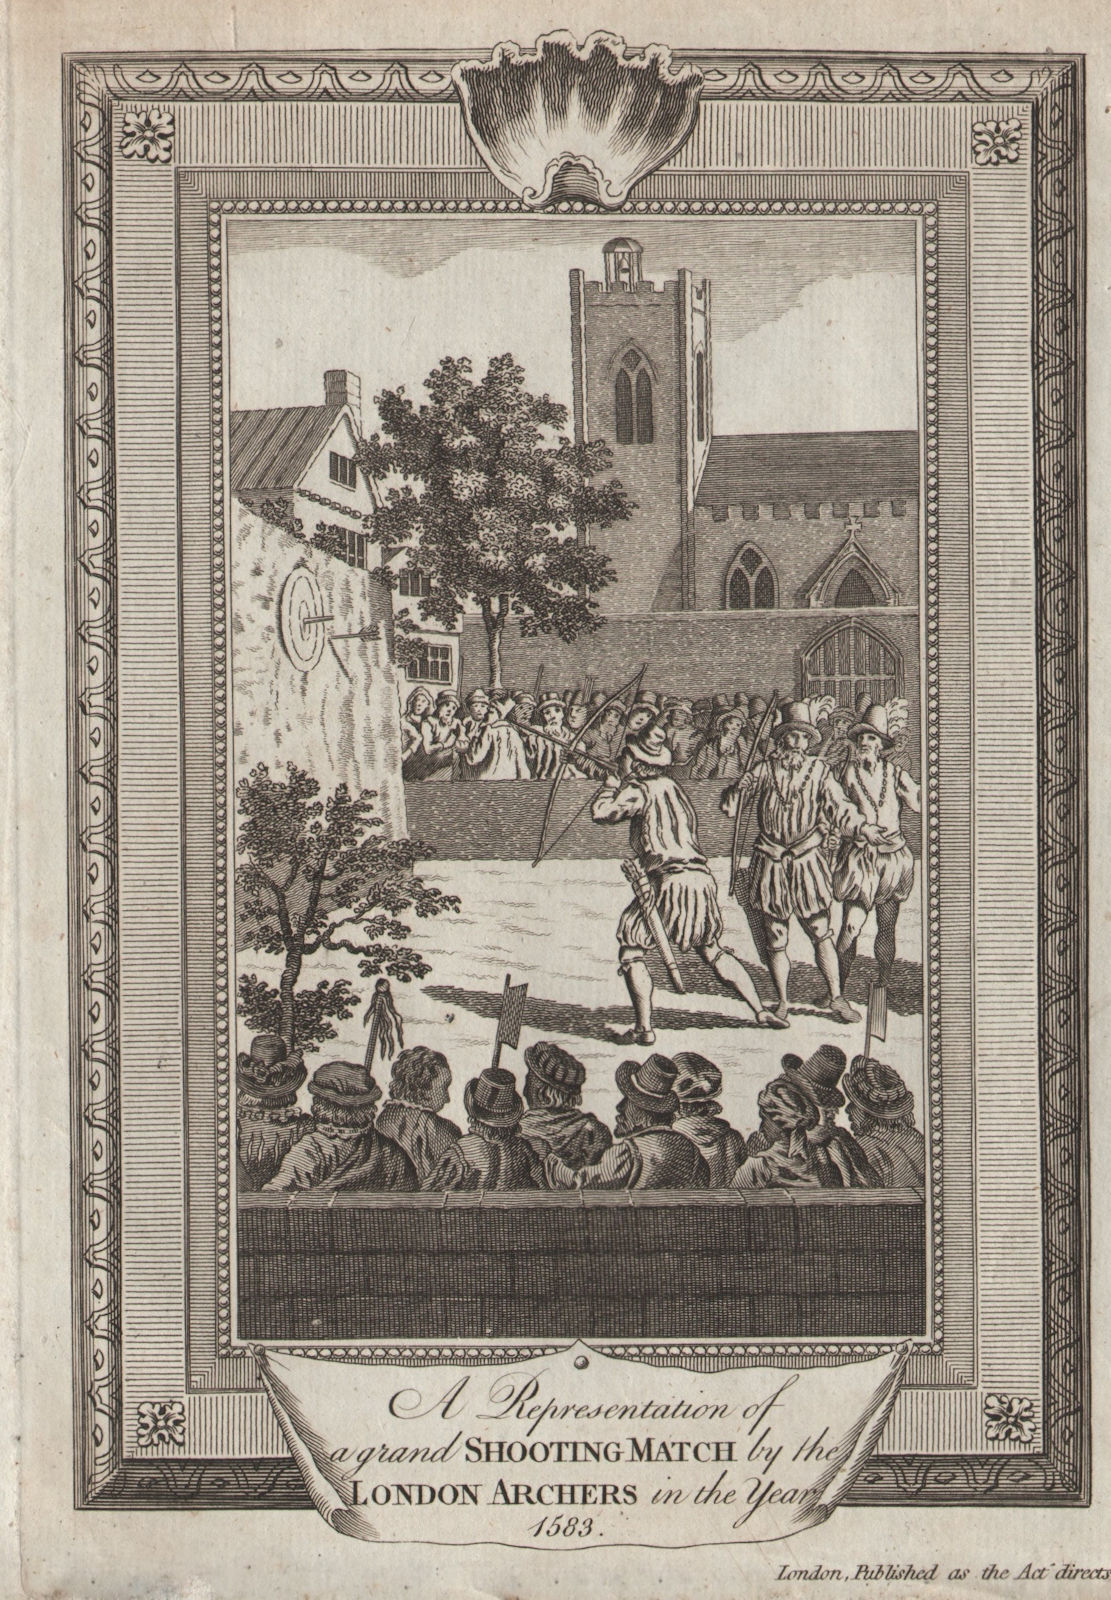 Associate Product An archery match in London, 1583. London Archers. THORNTON 1784 old print